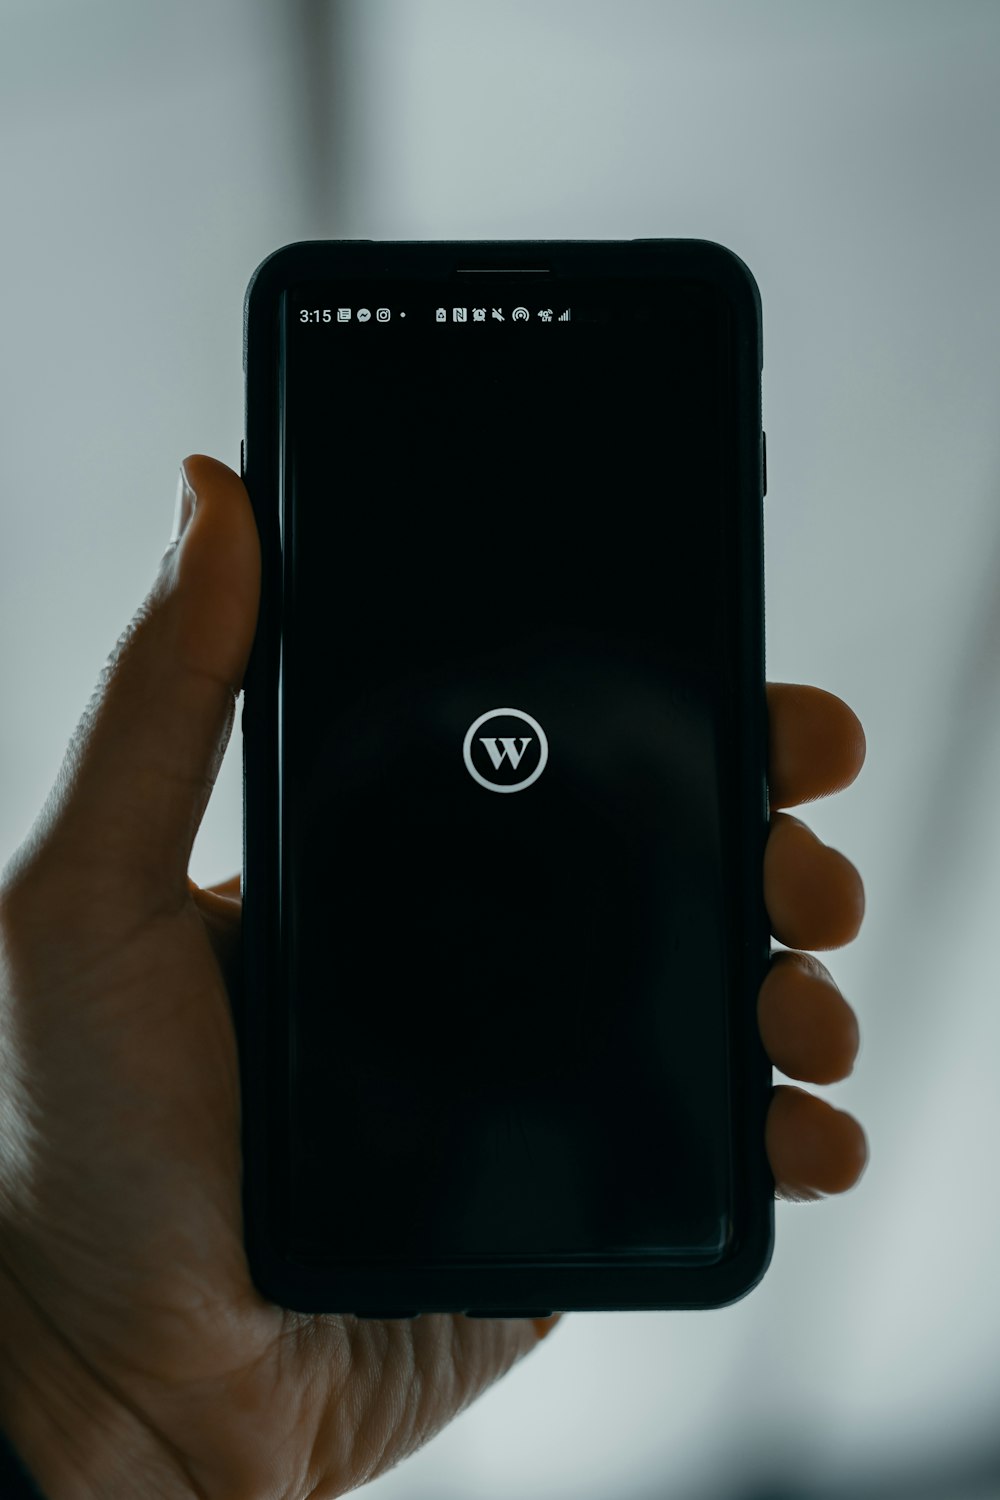 Black lg android smartphone turned on displaying 9 photo – Free Canada  Image on Unsplash